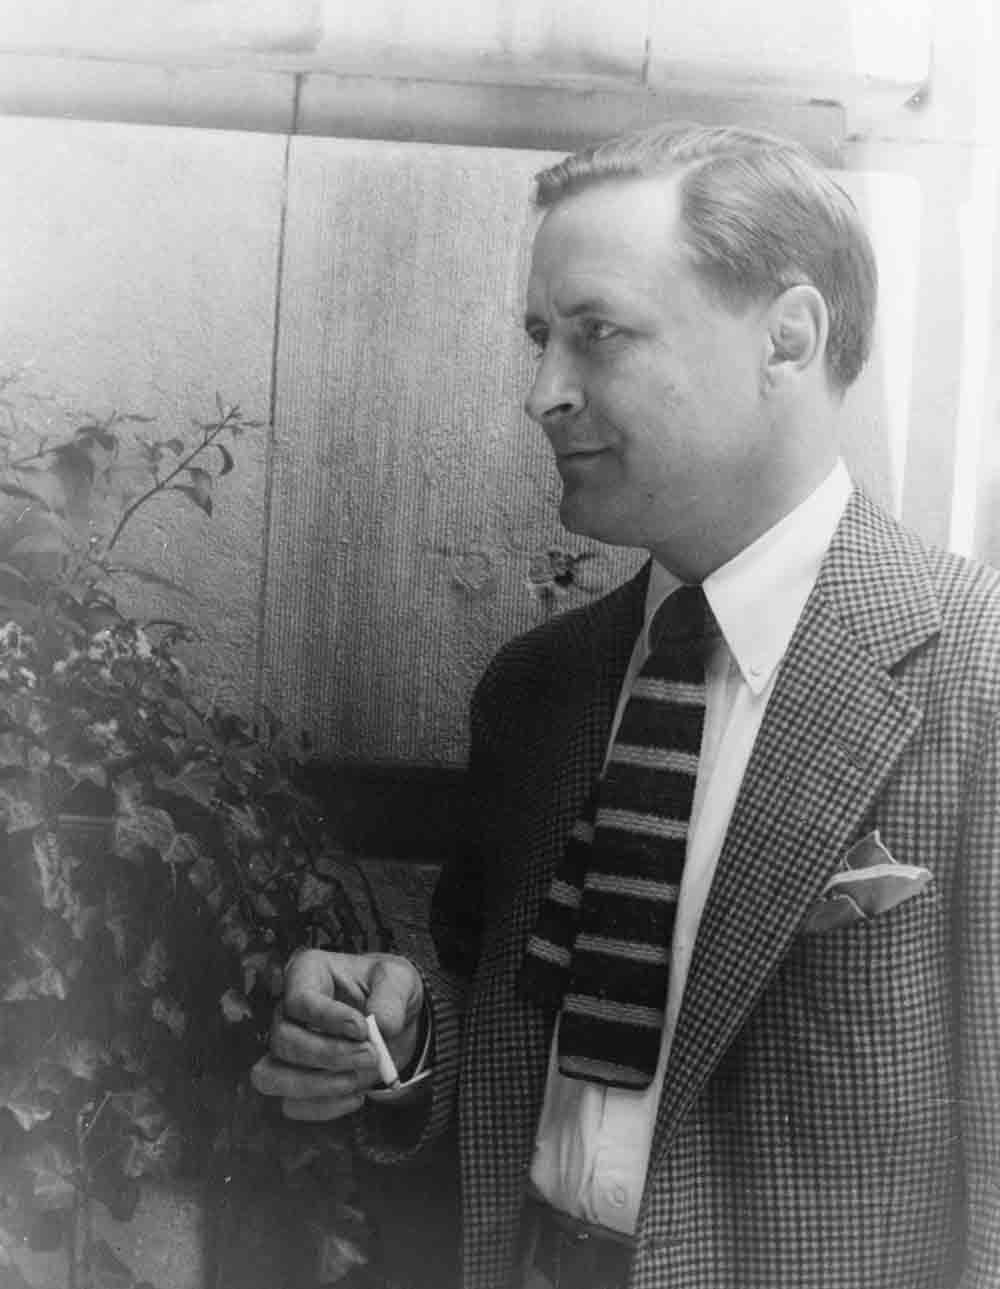 F Scott Fitzgerald photograph 1937